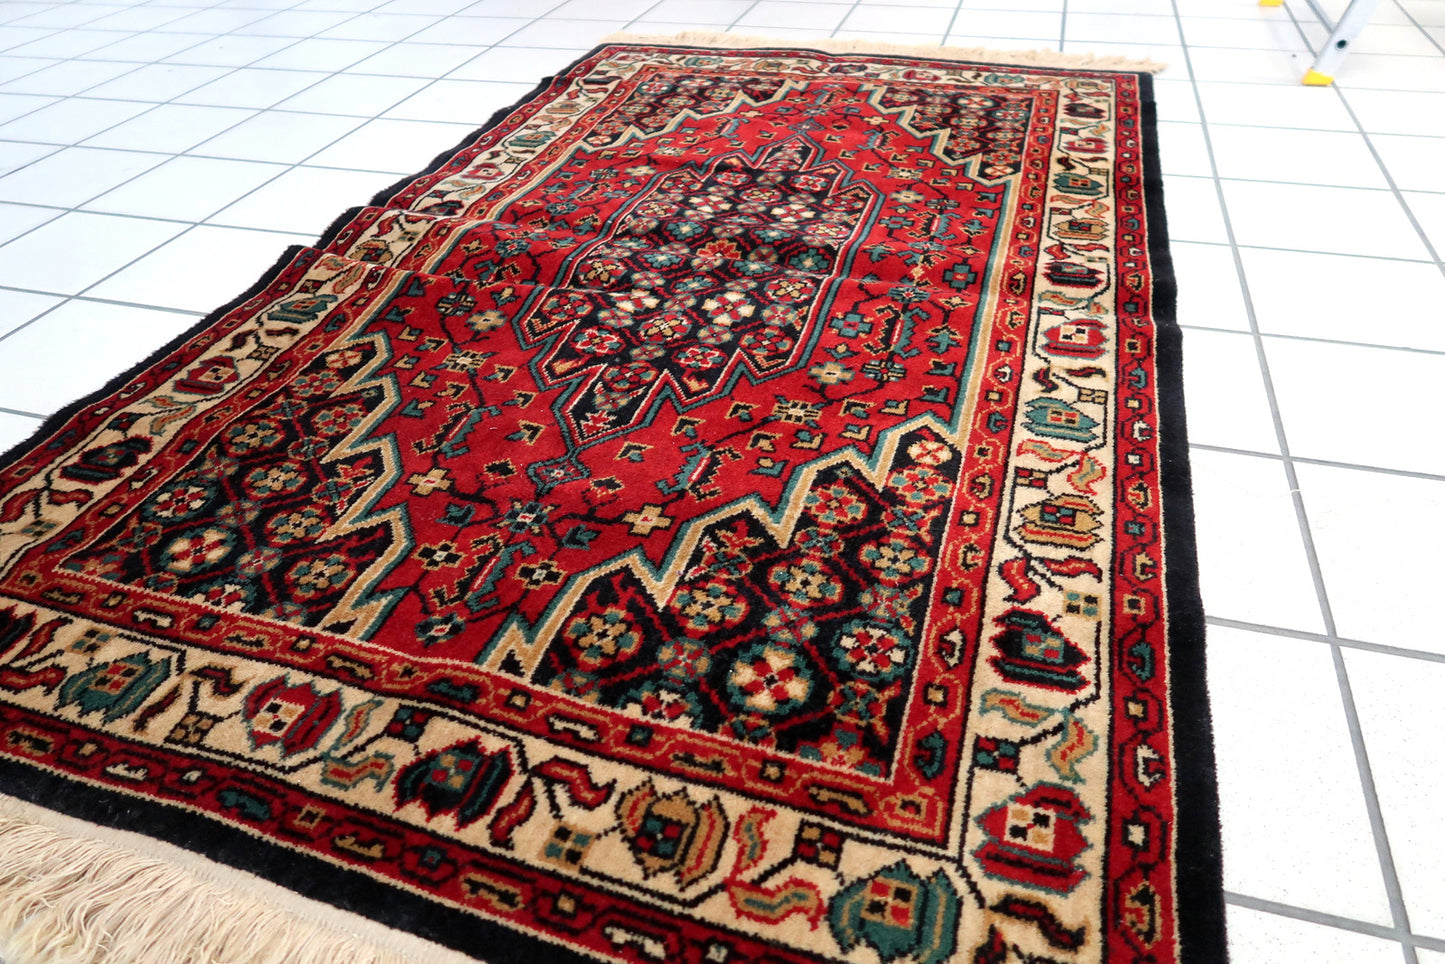 Vintage Persian Mazlahan style rug 3' x 5' (93cm x 154cm) 1970s - 1C934